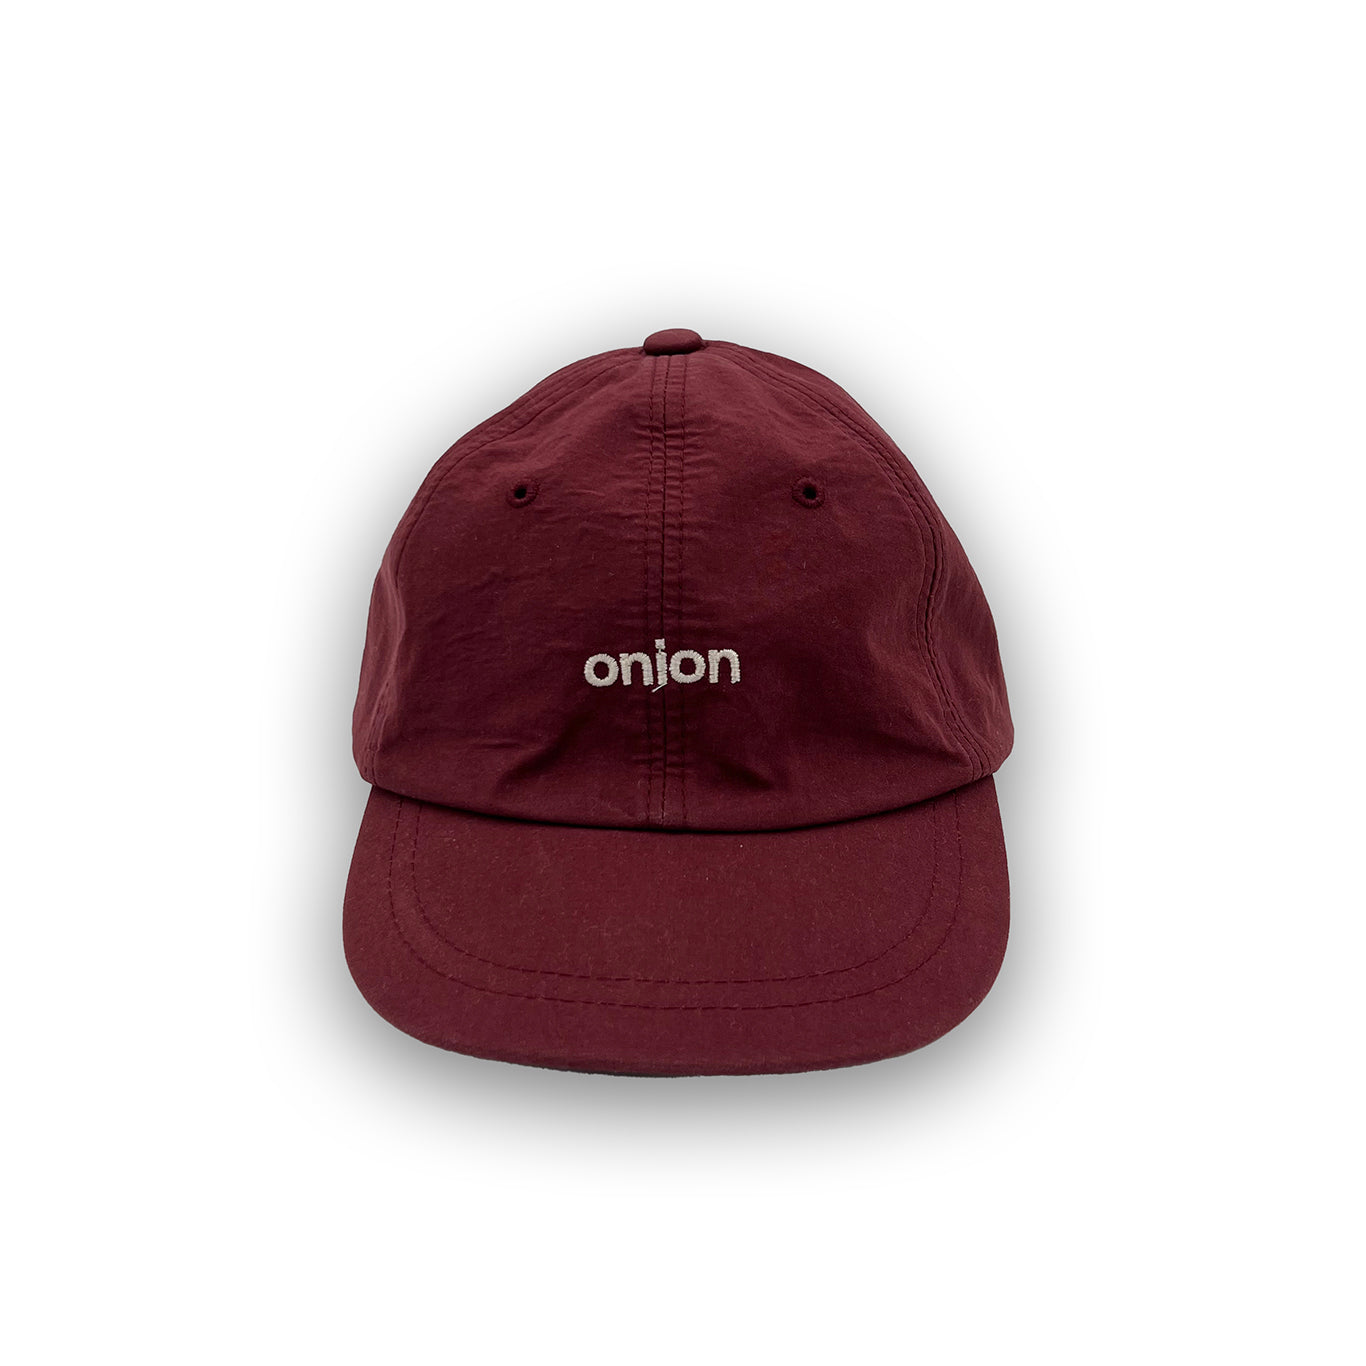 Onion Ball Cap